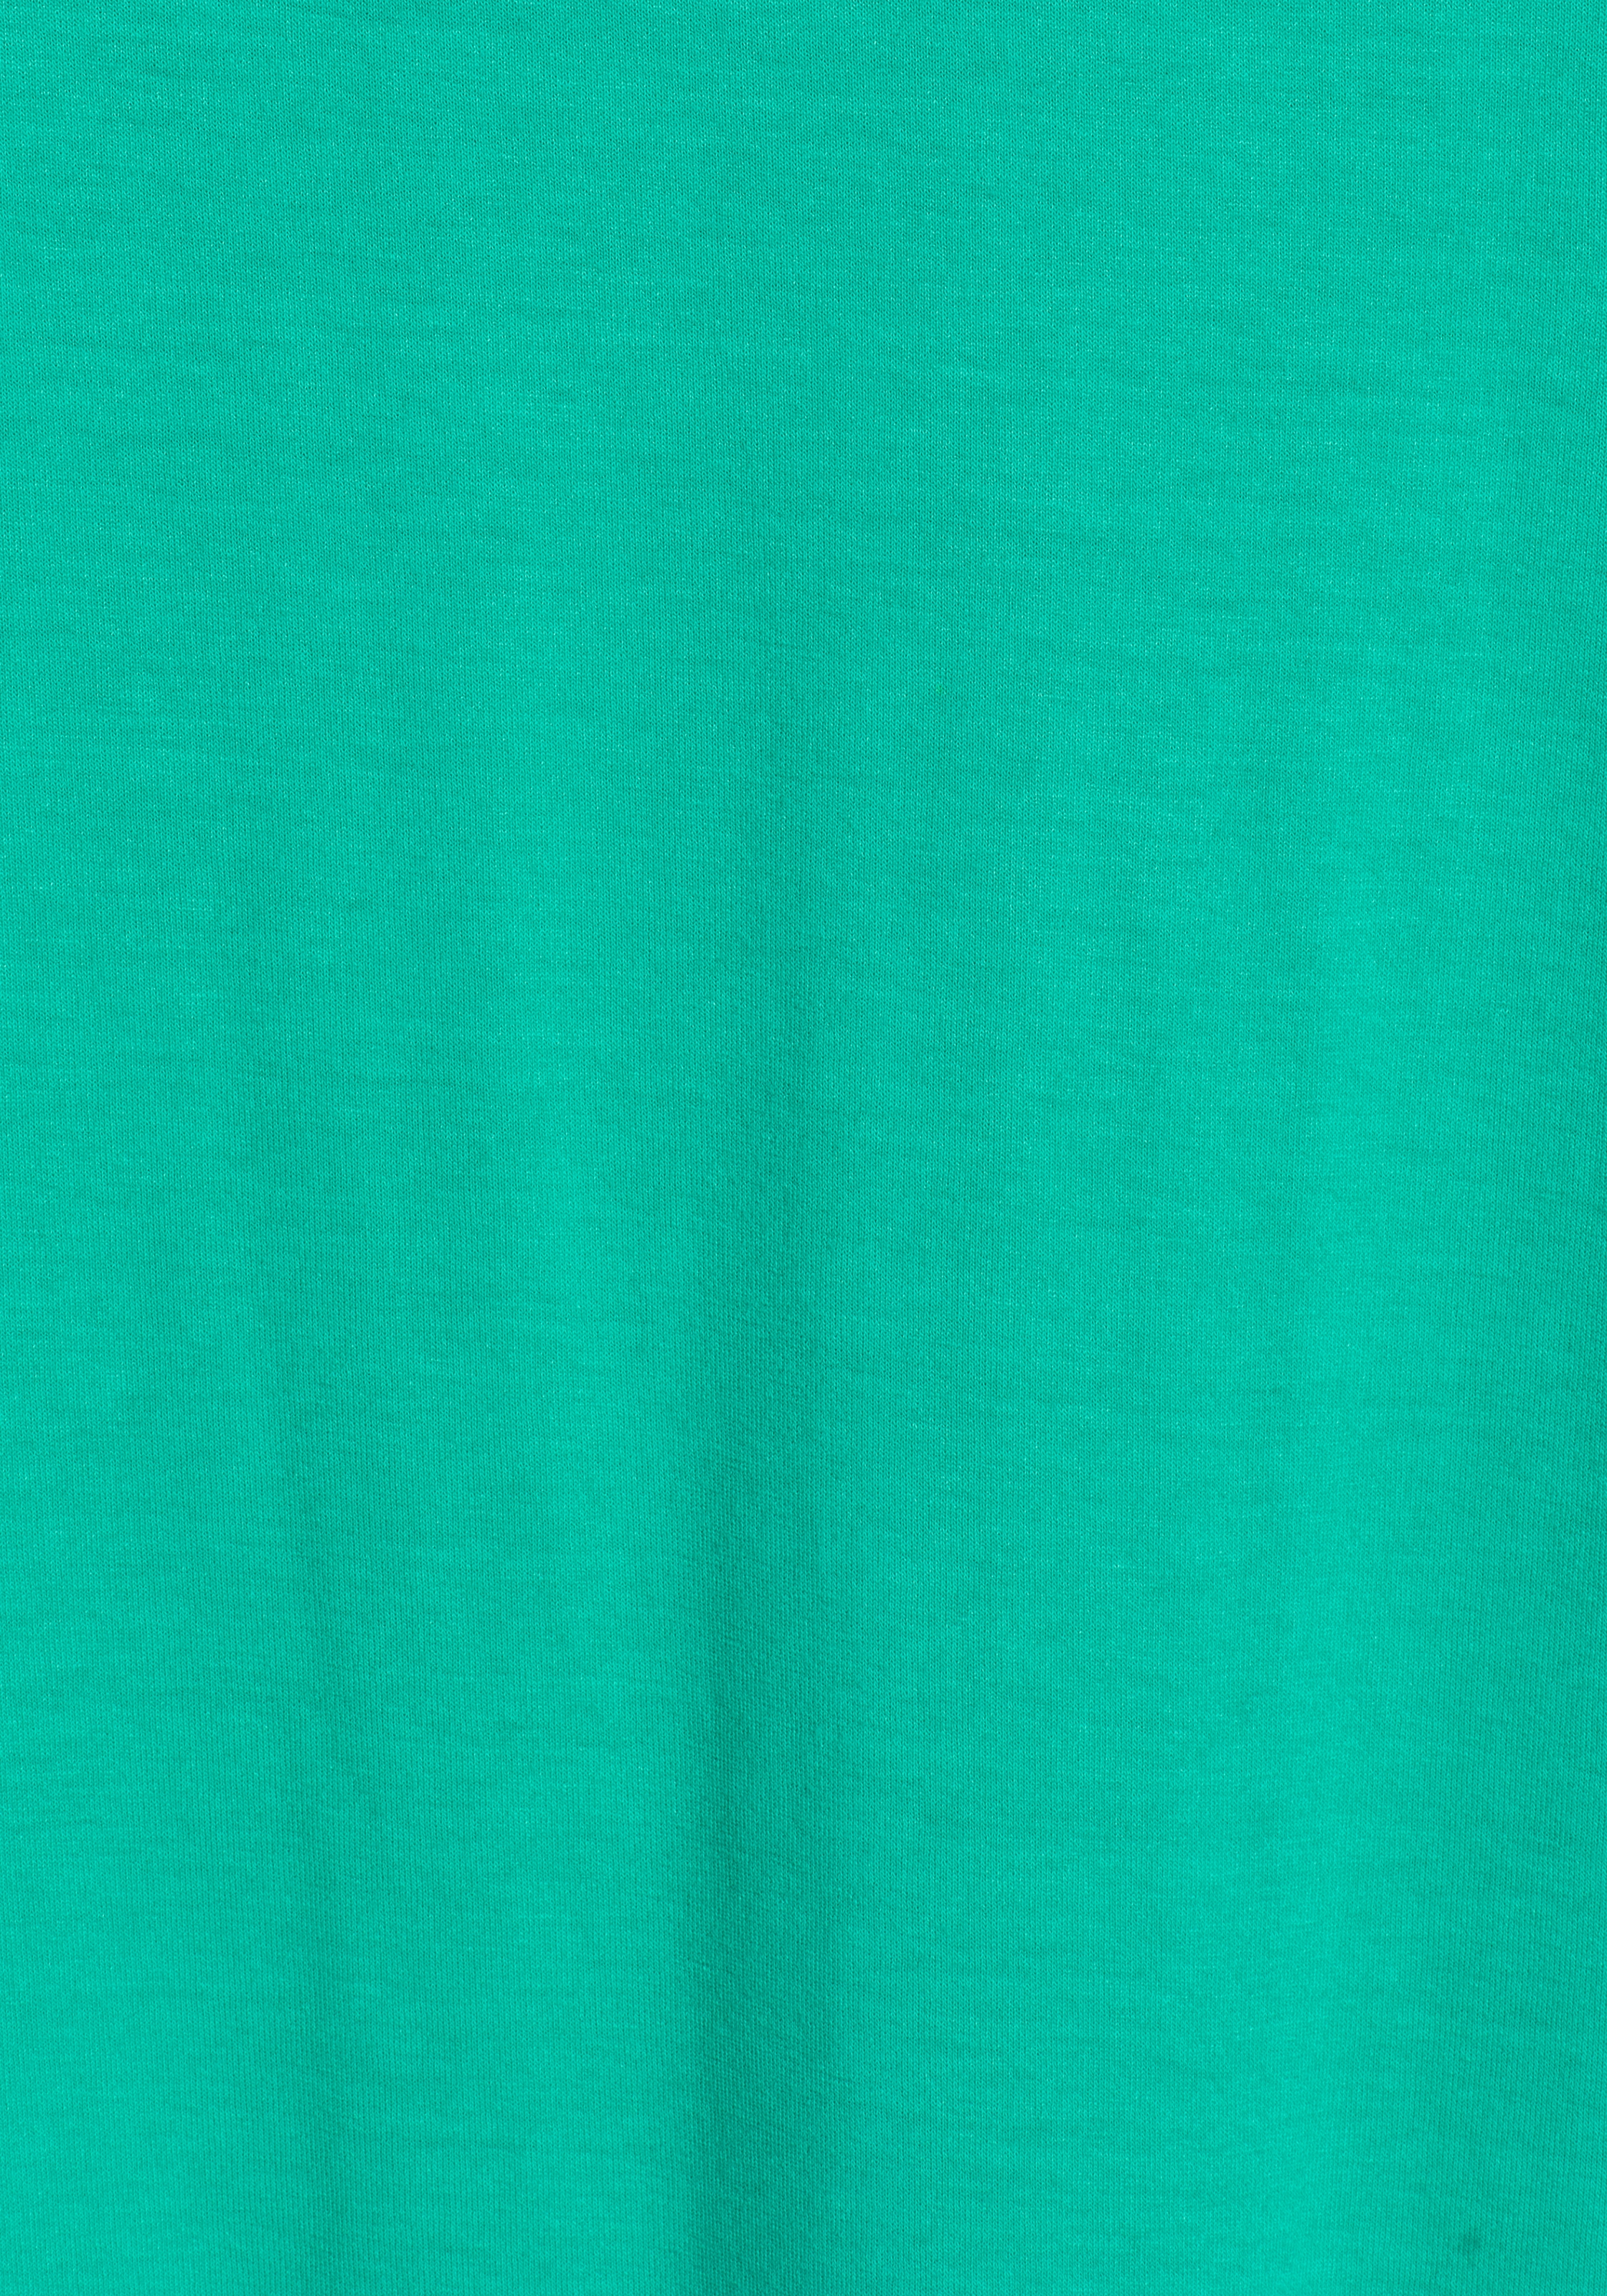 Melrose T-Shirt, mit femininen Glitzer-Details - NEUE KOLLEKTTION